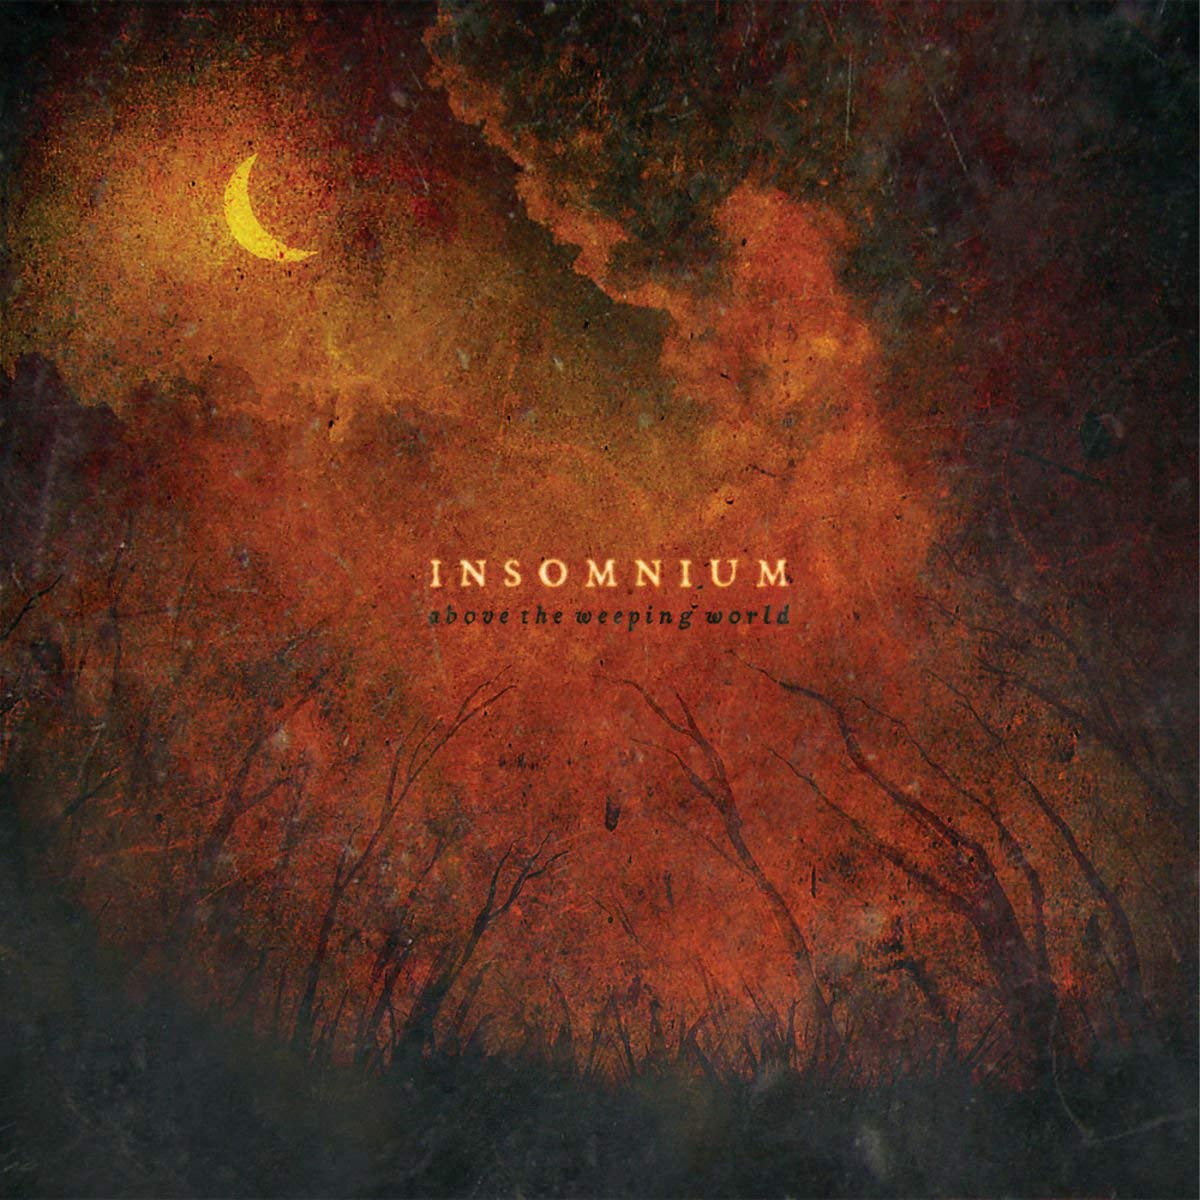 Insomnium ‎– Above The Weeping World (2006) - New 2 Lp Record 2018 Spinefarm Europe Import Translucent Orange 180 gram Vinyl - Melodic Death Metal